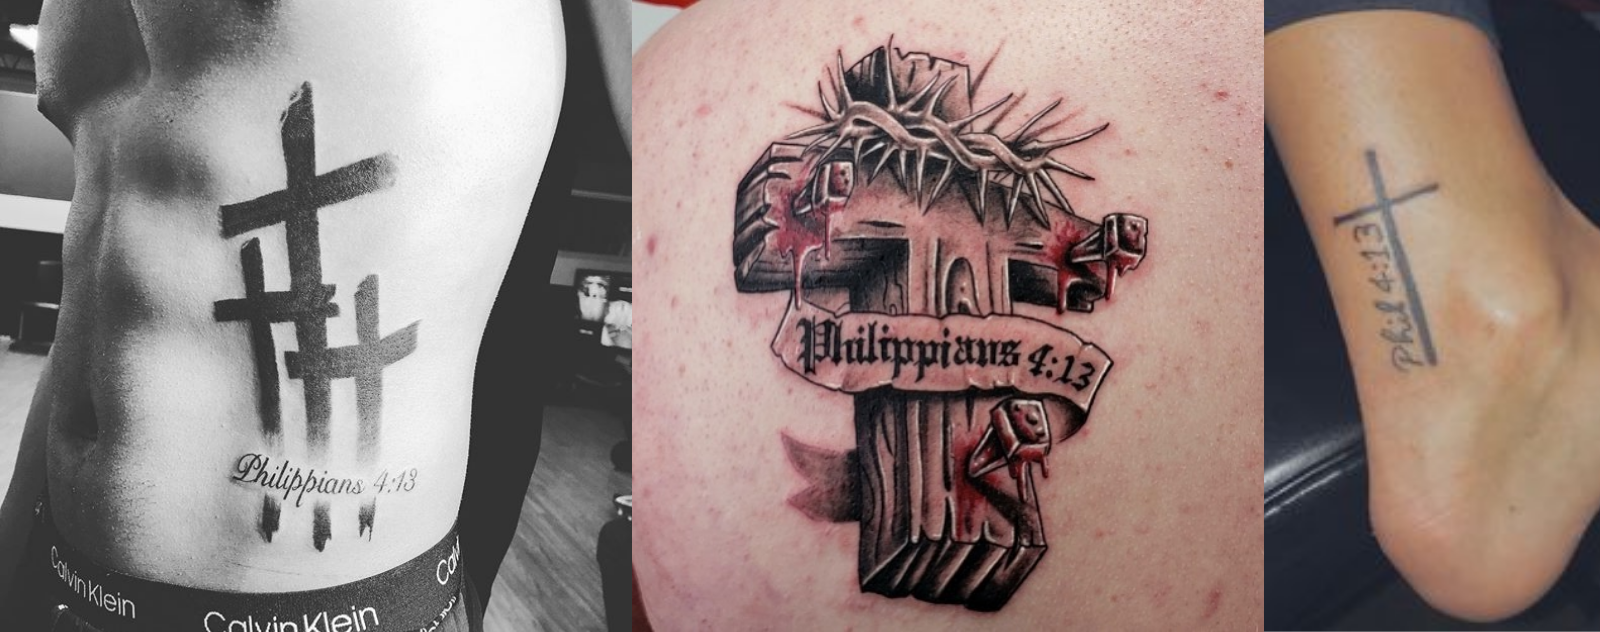 philippians-4-13-tattoo-with-cross-18